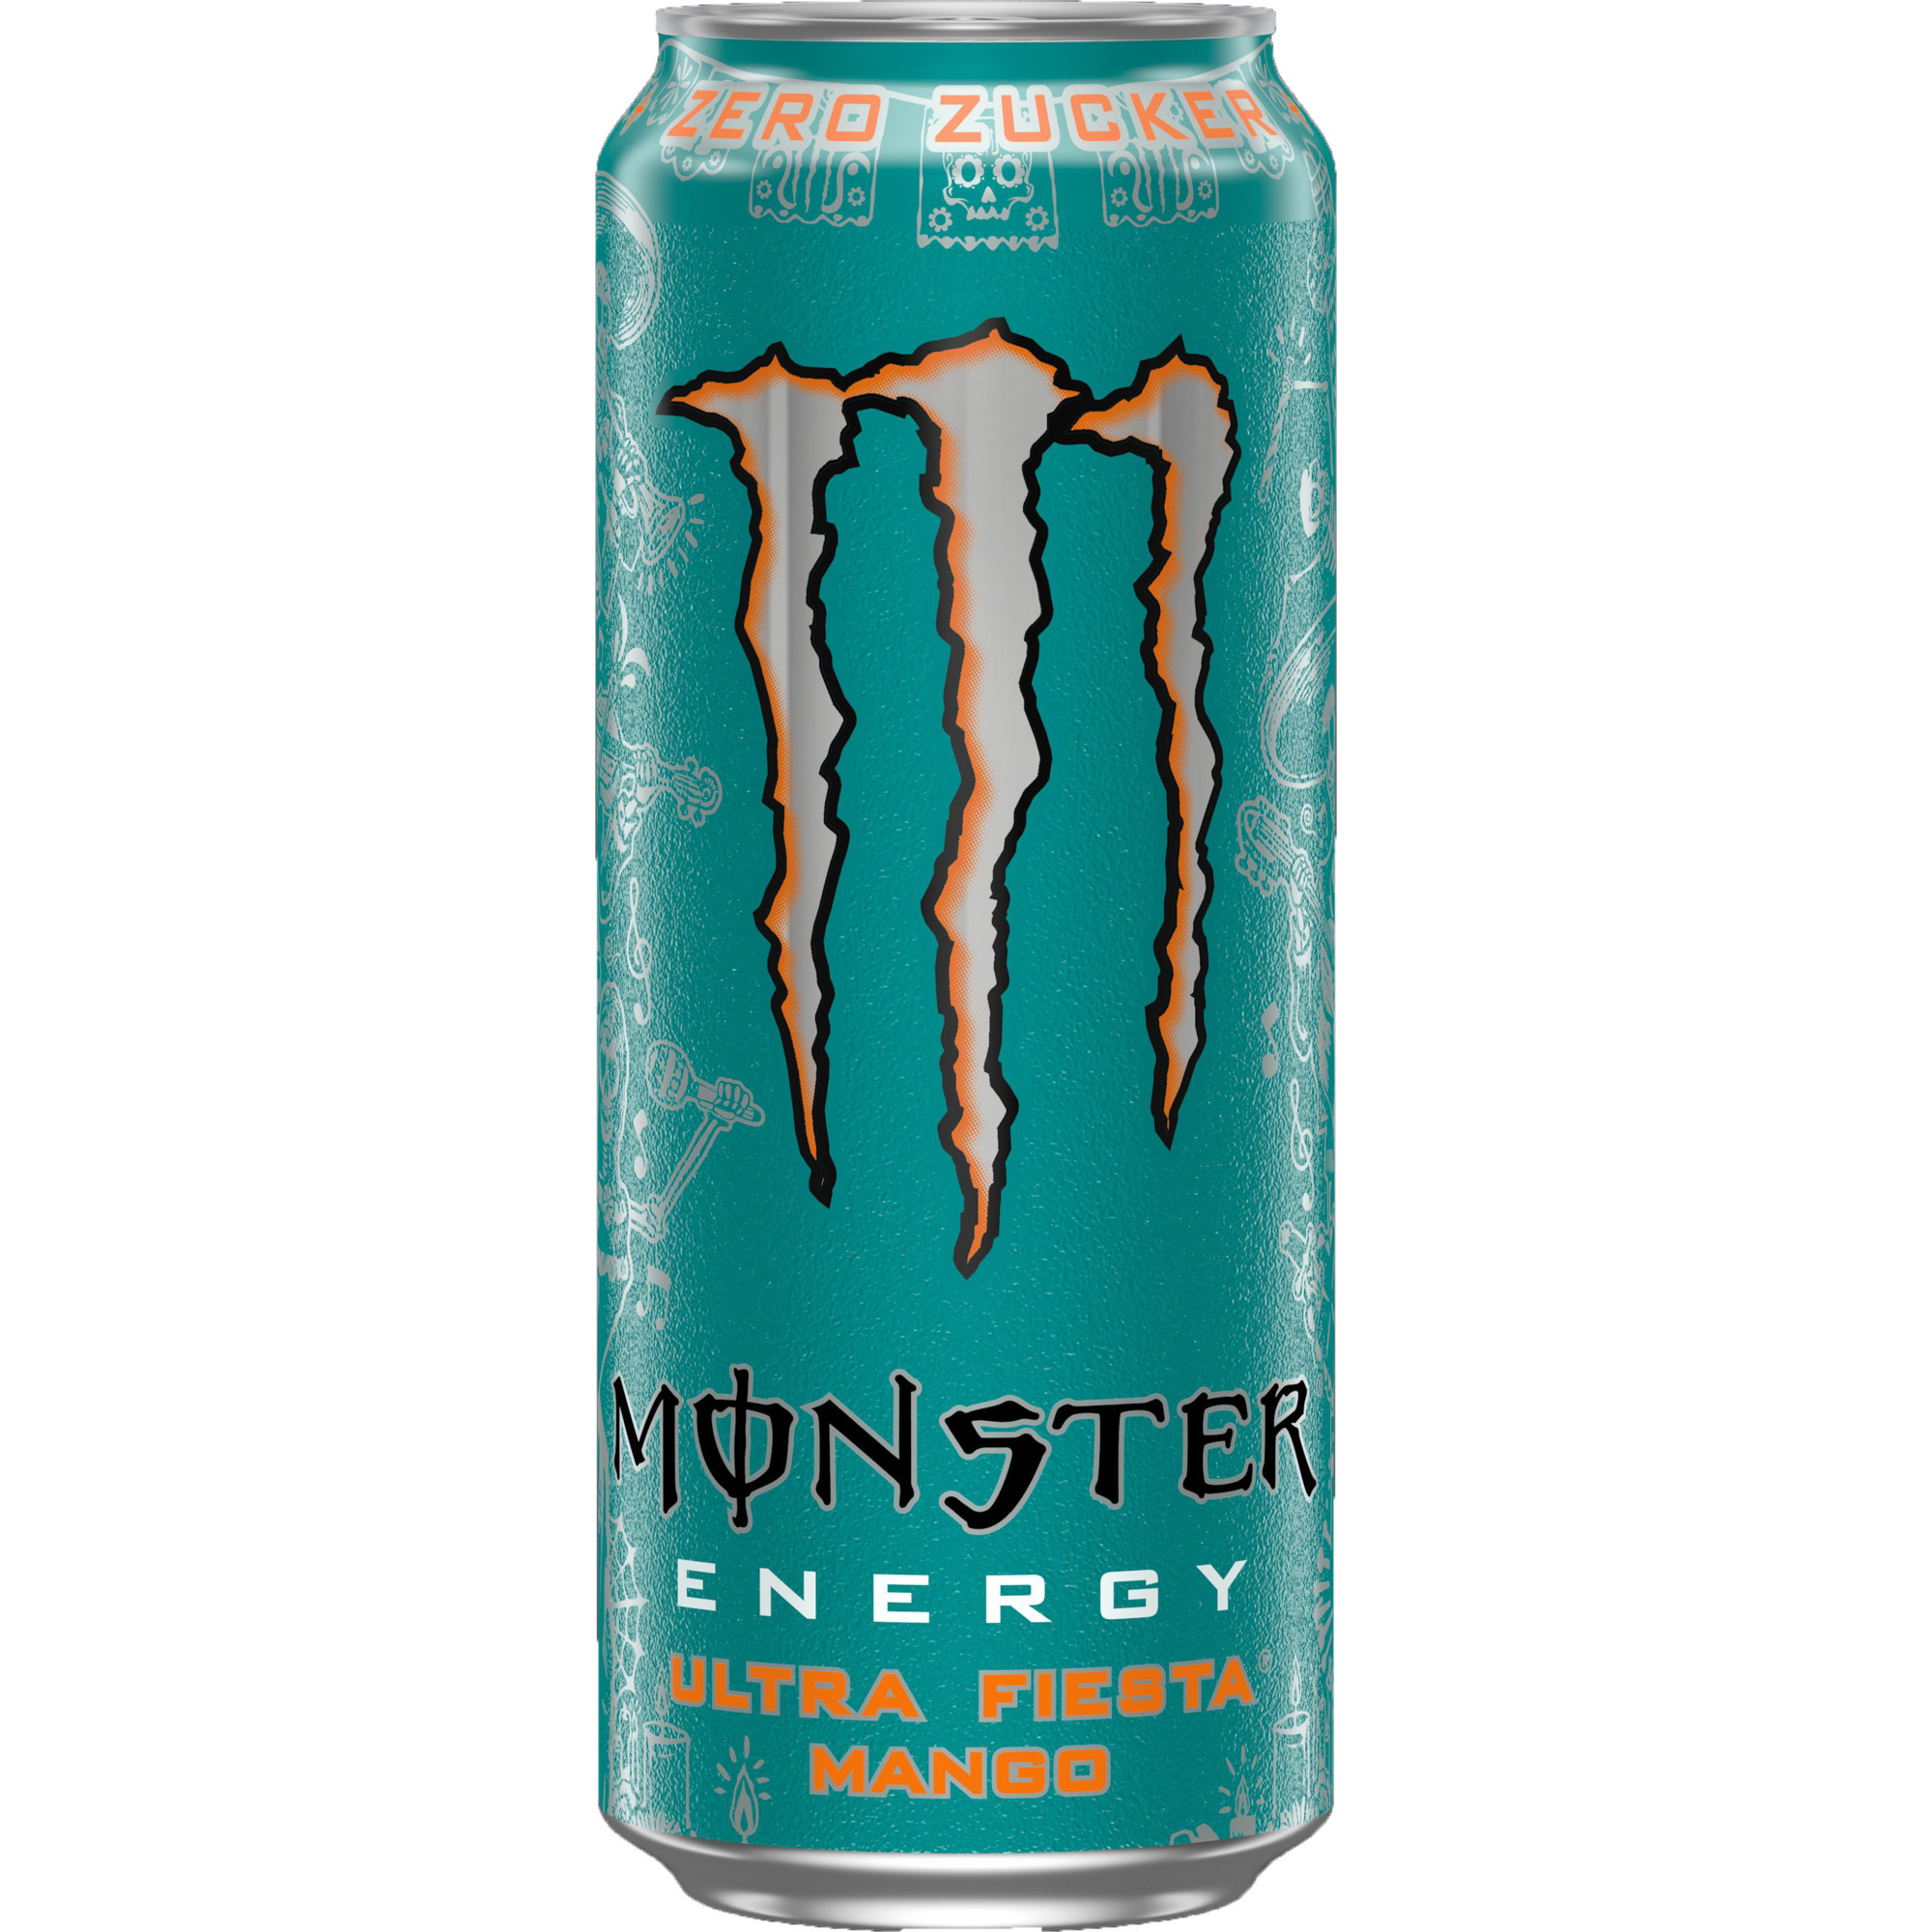 Monster Dose 500ml, Fiesta Mango